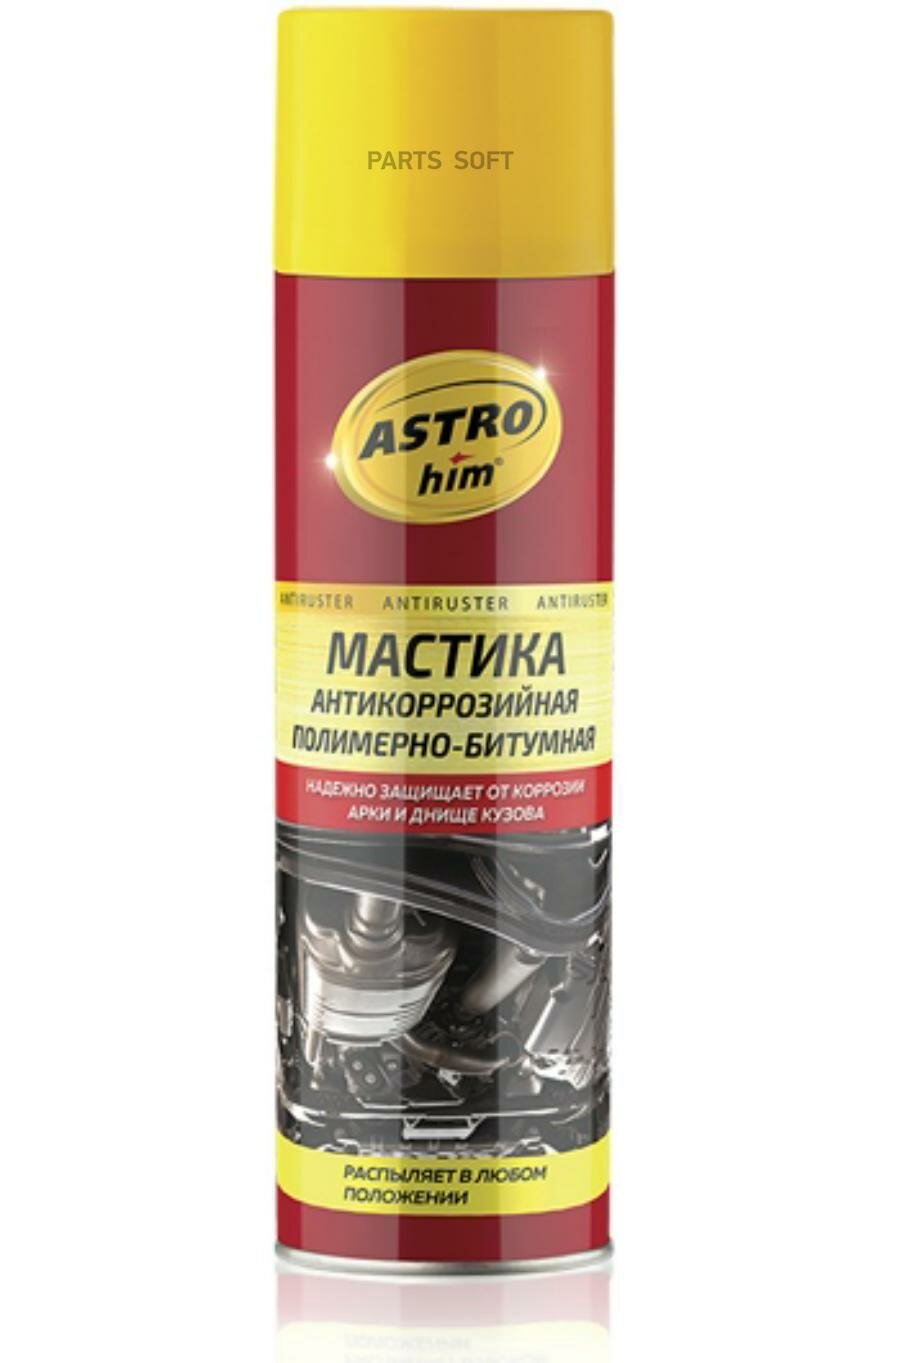 ASTROHIM AC491 мастика антикоррозийная поимерно-битумная, аэрозо